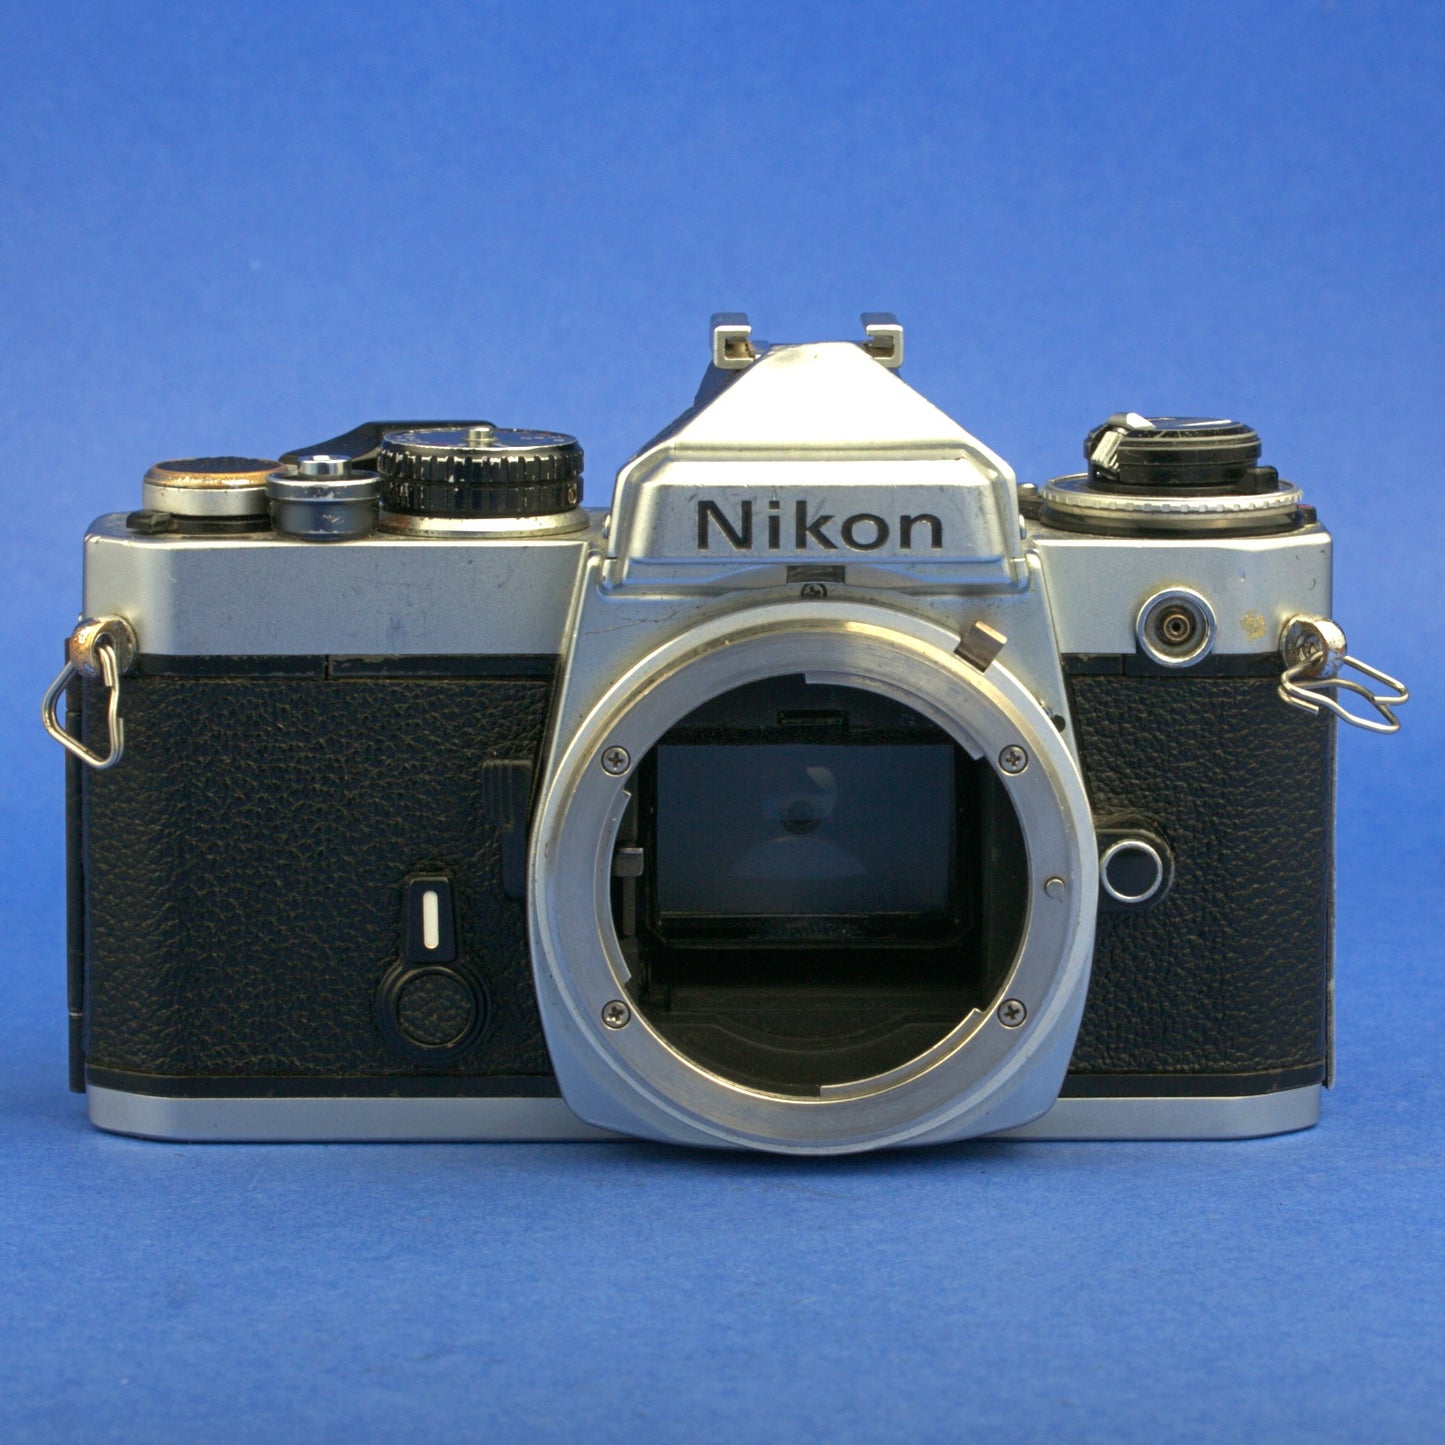 Nikon FE Film Camera Body Not Working